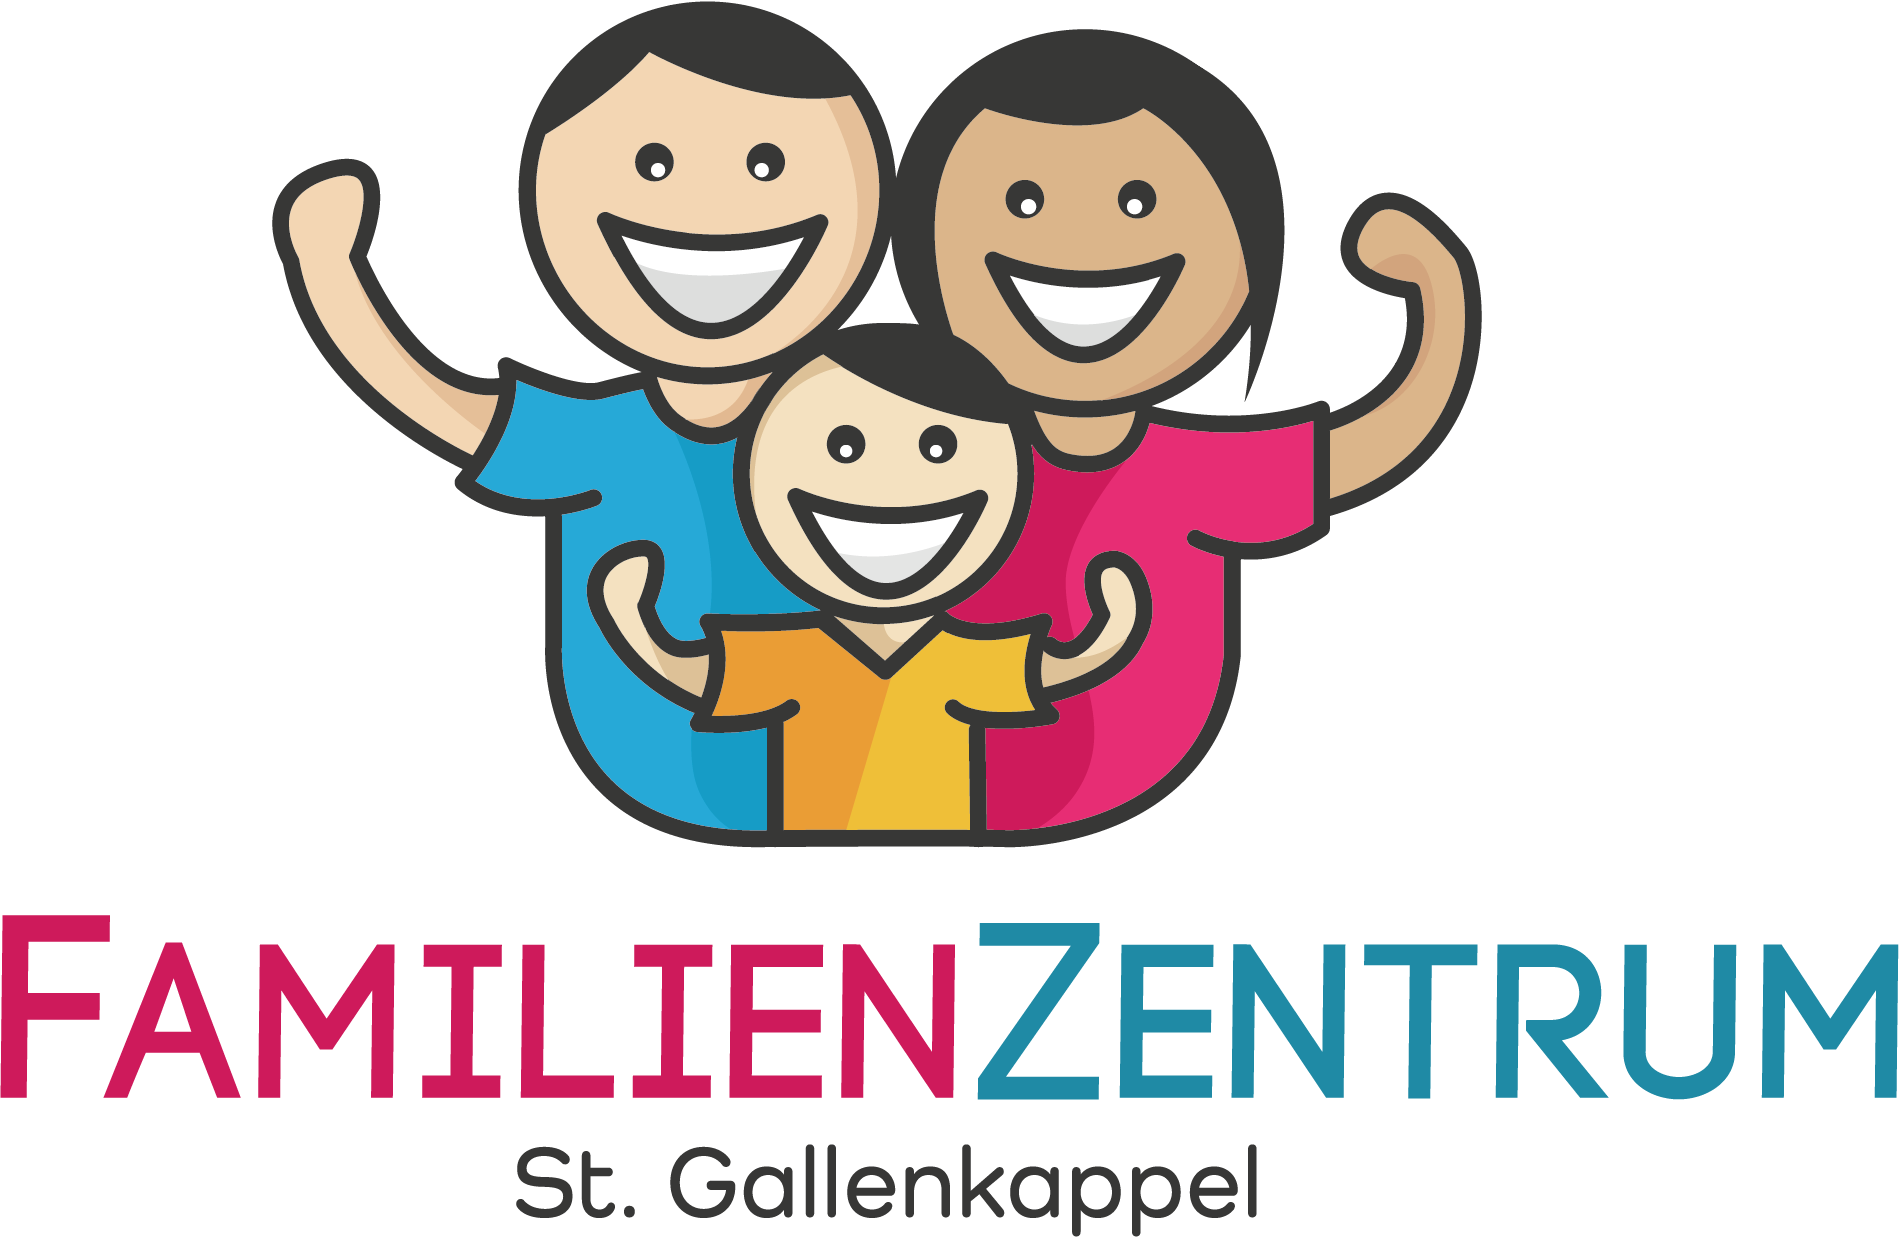 Familienzentrum - St. Gallenkappel